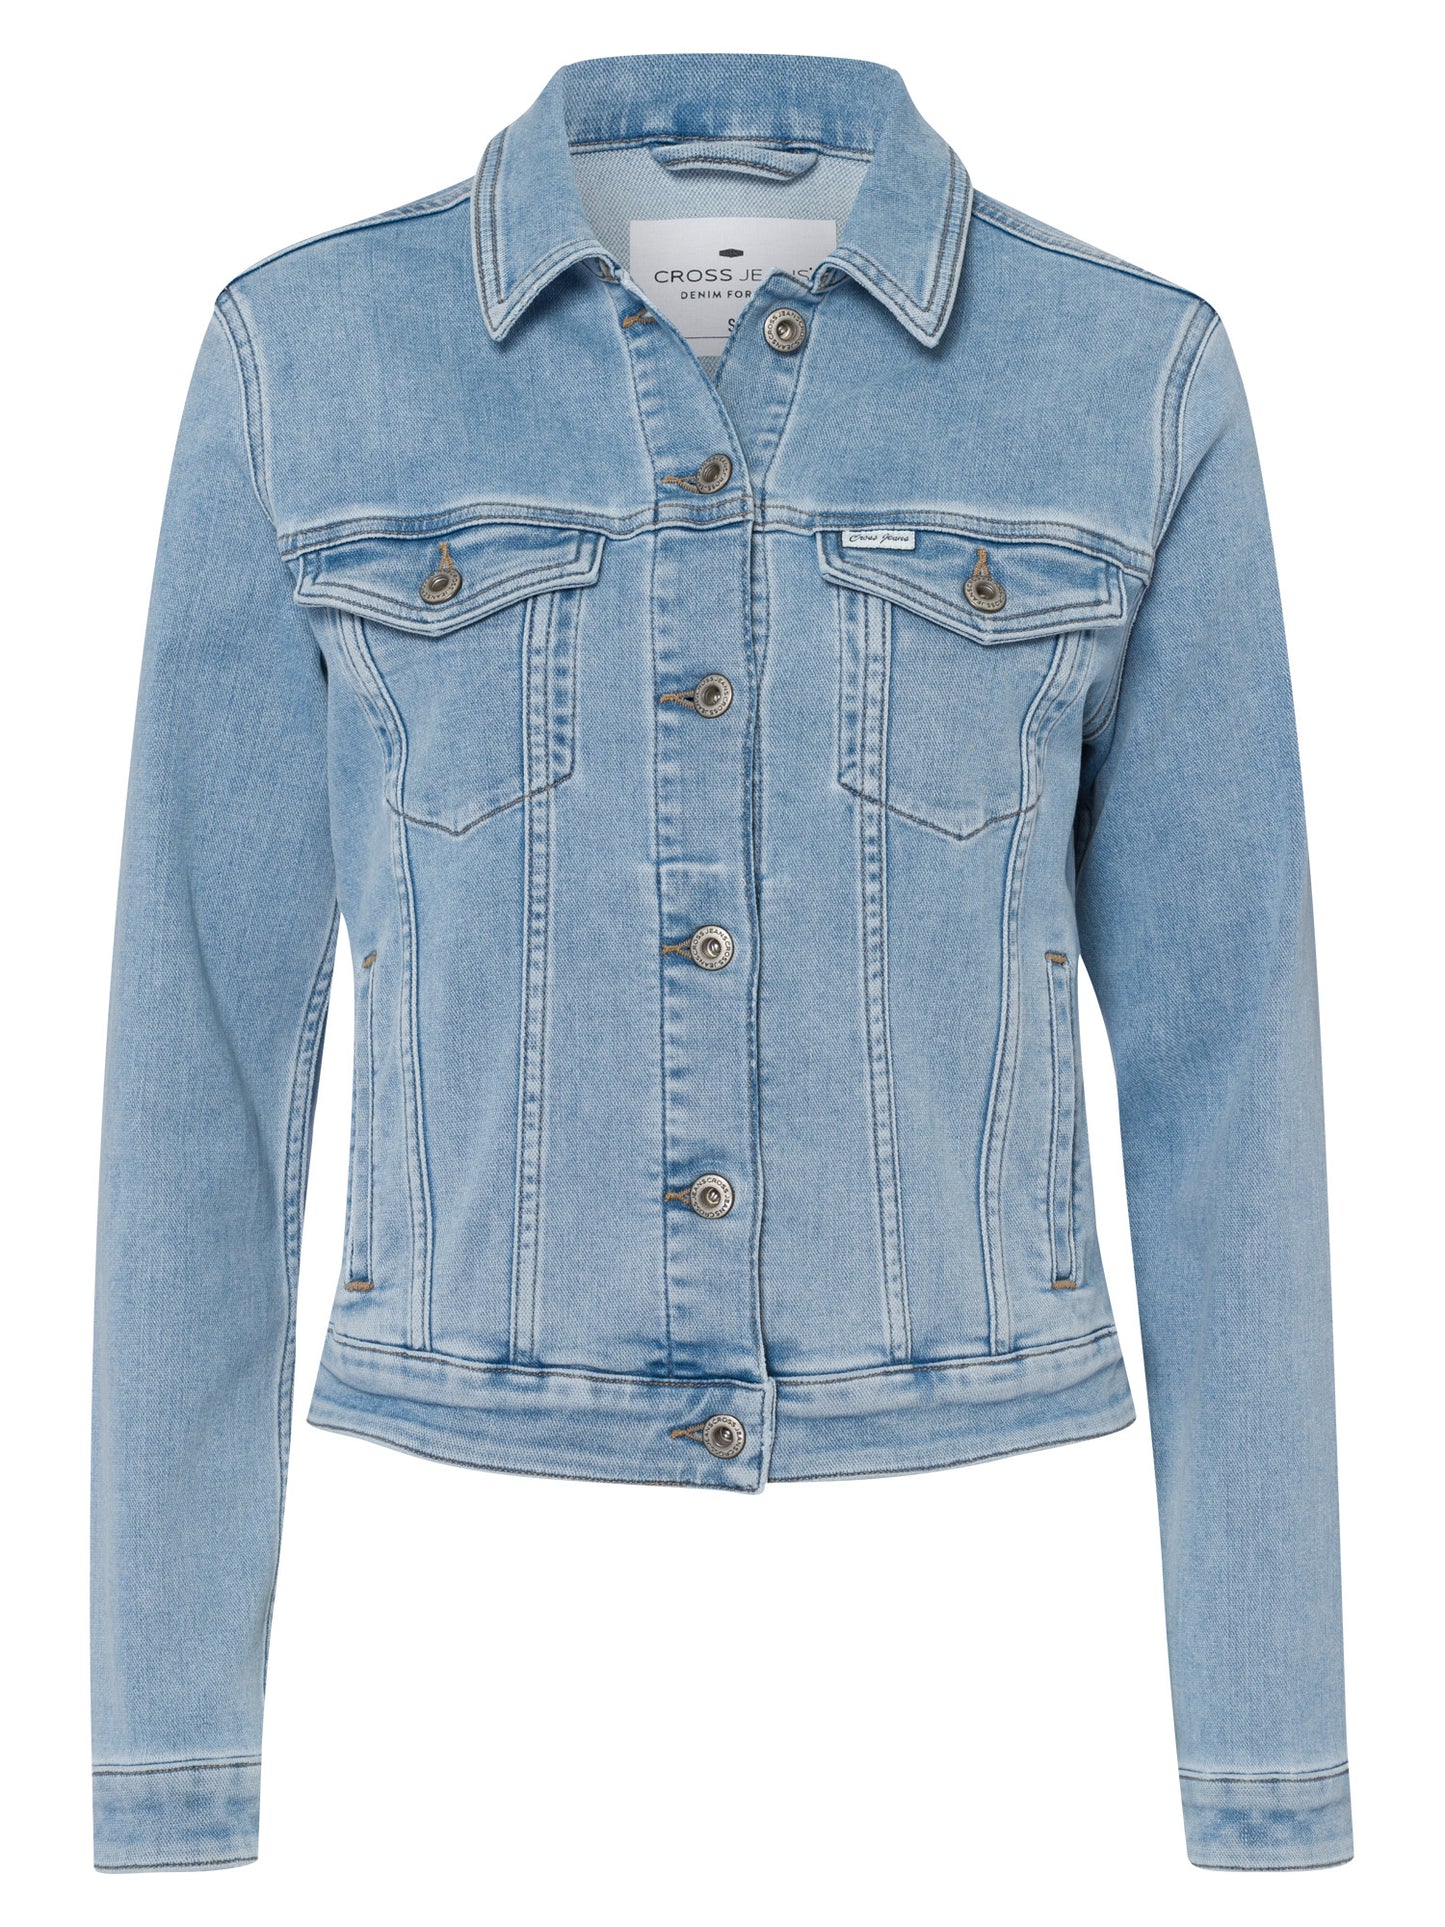 Women's denim jacket denim jacket regular fit light blue